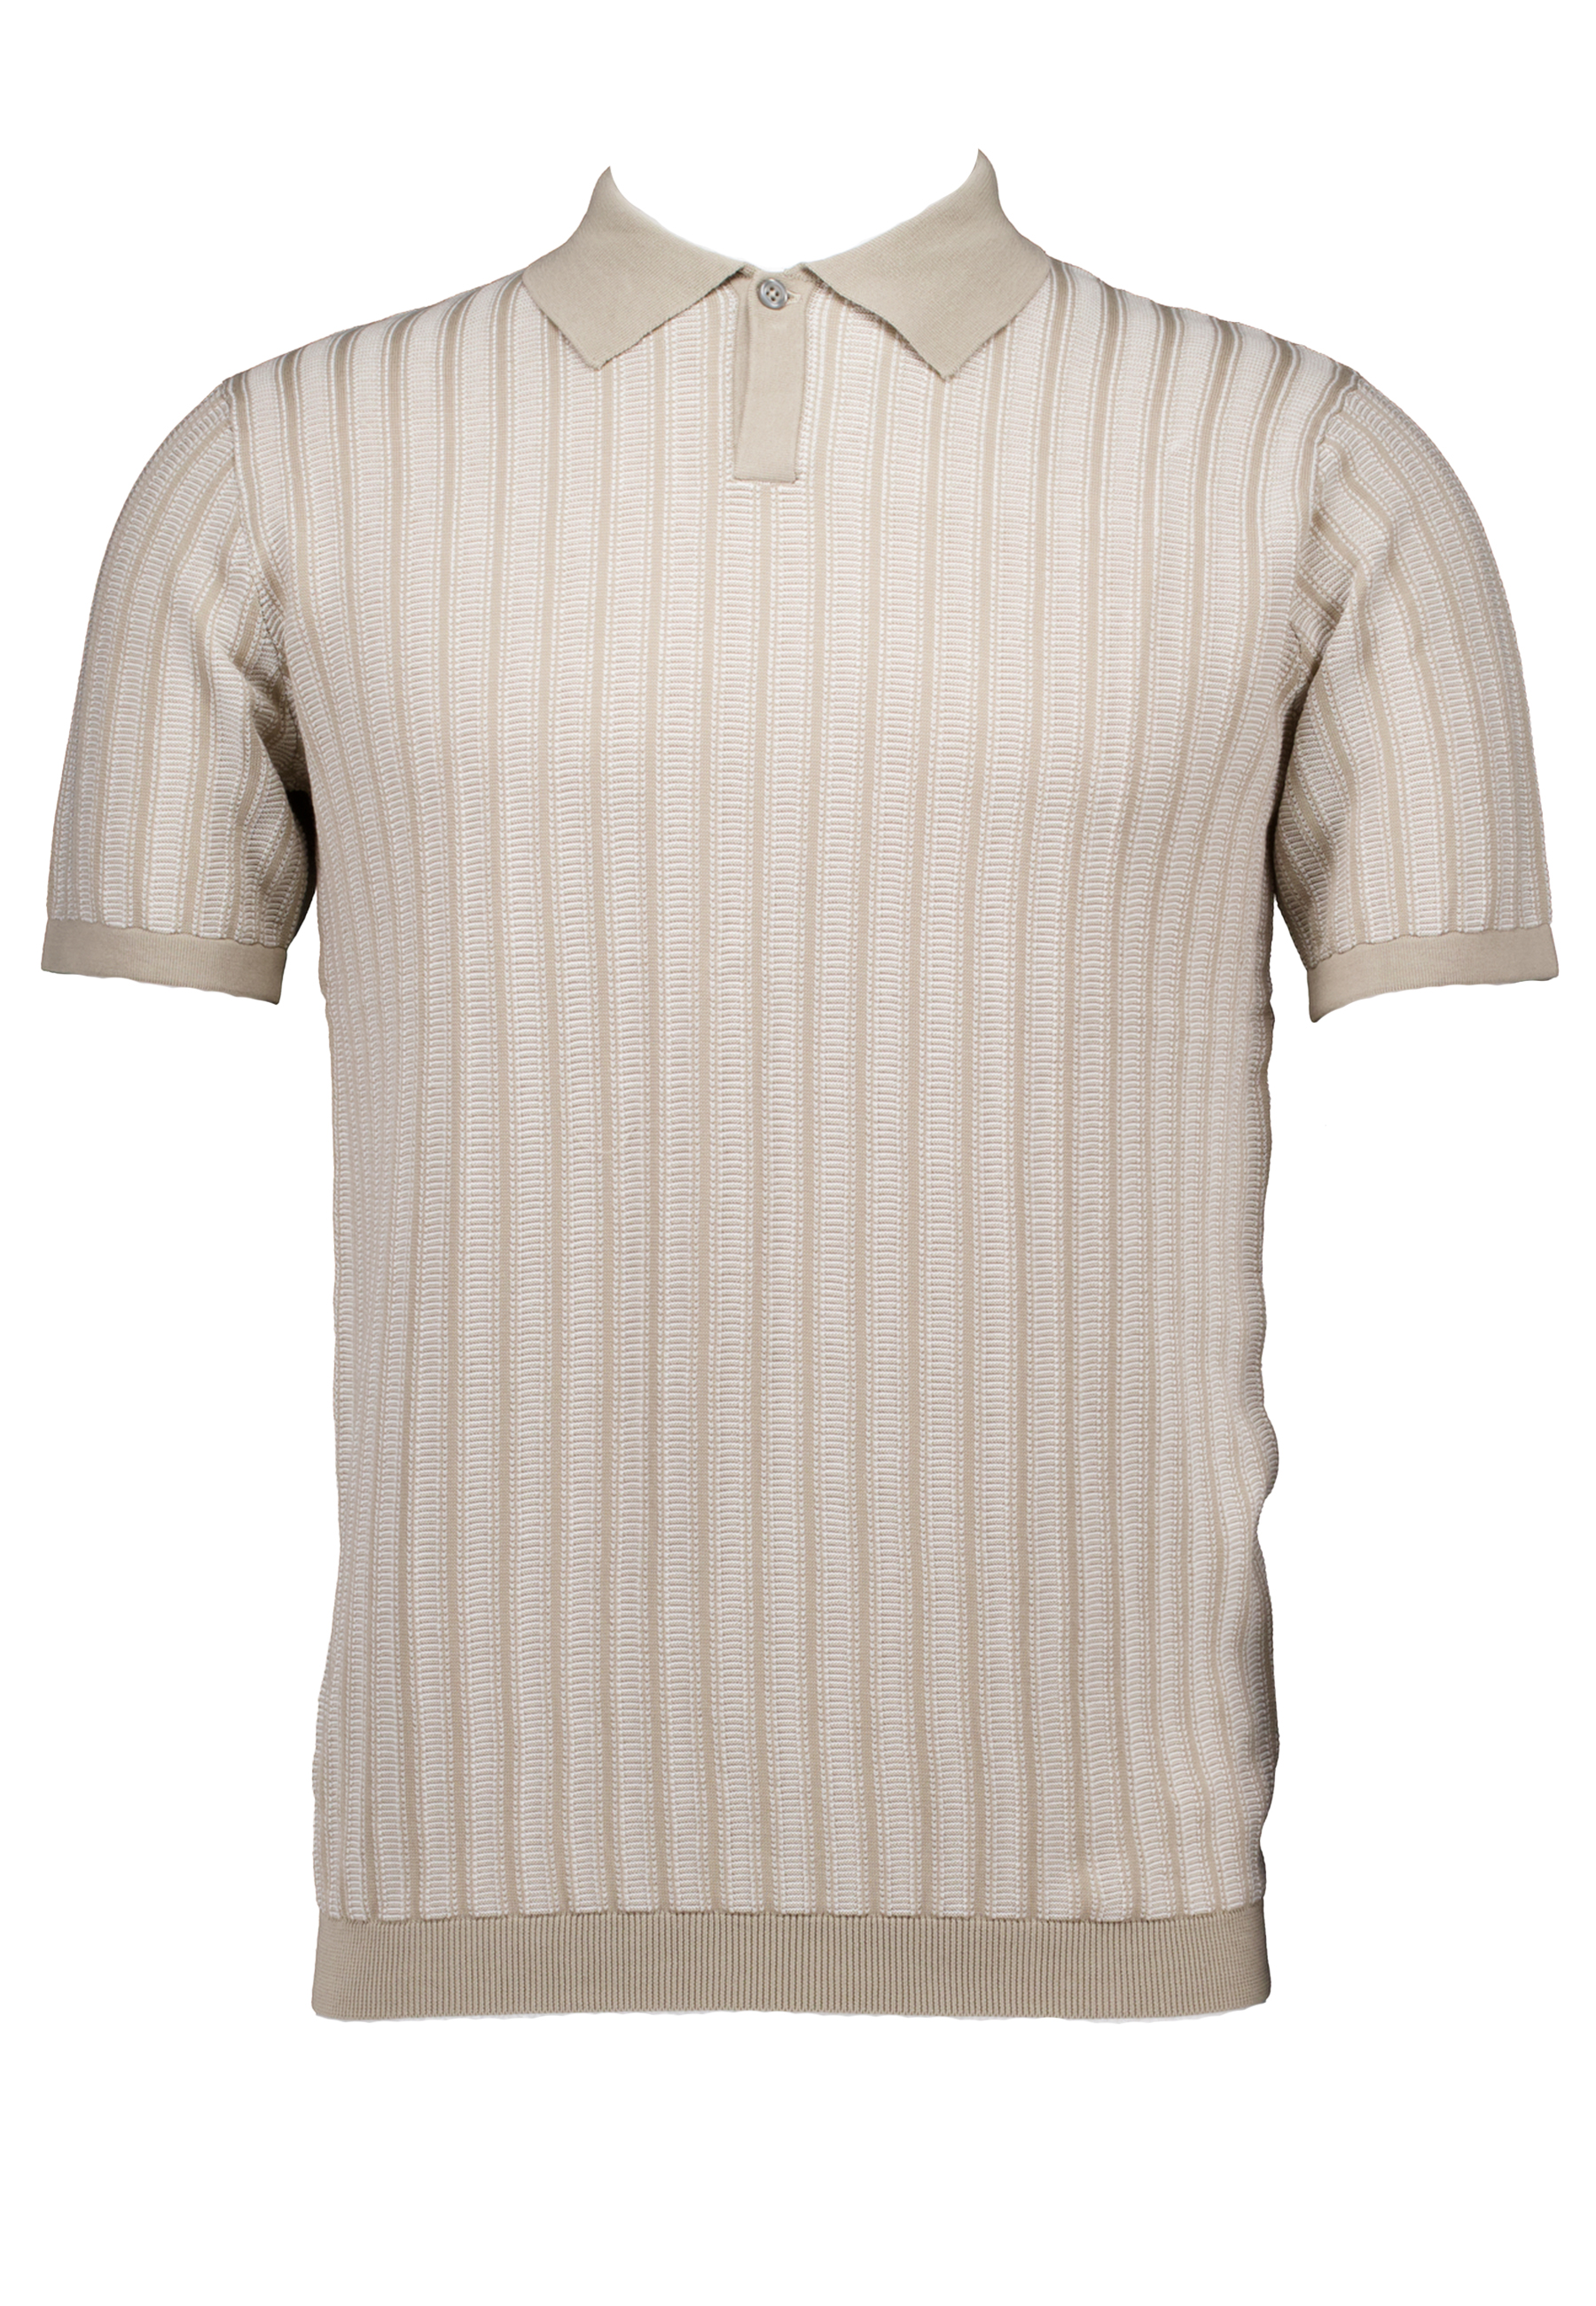 Gentiluomo K9110-285 Polo's & T-shirts Heren - Polo shirt - Zand - Maat M